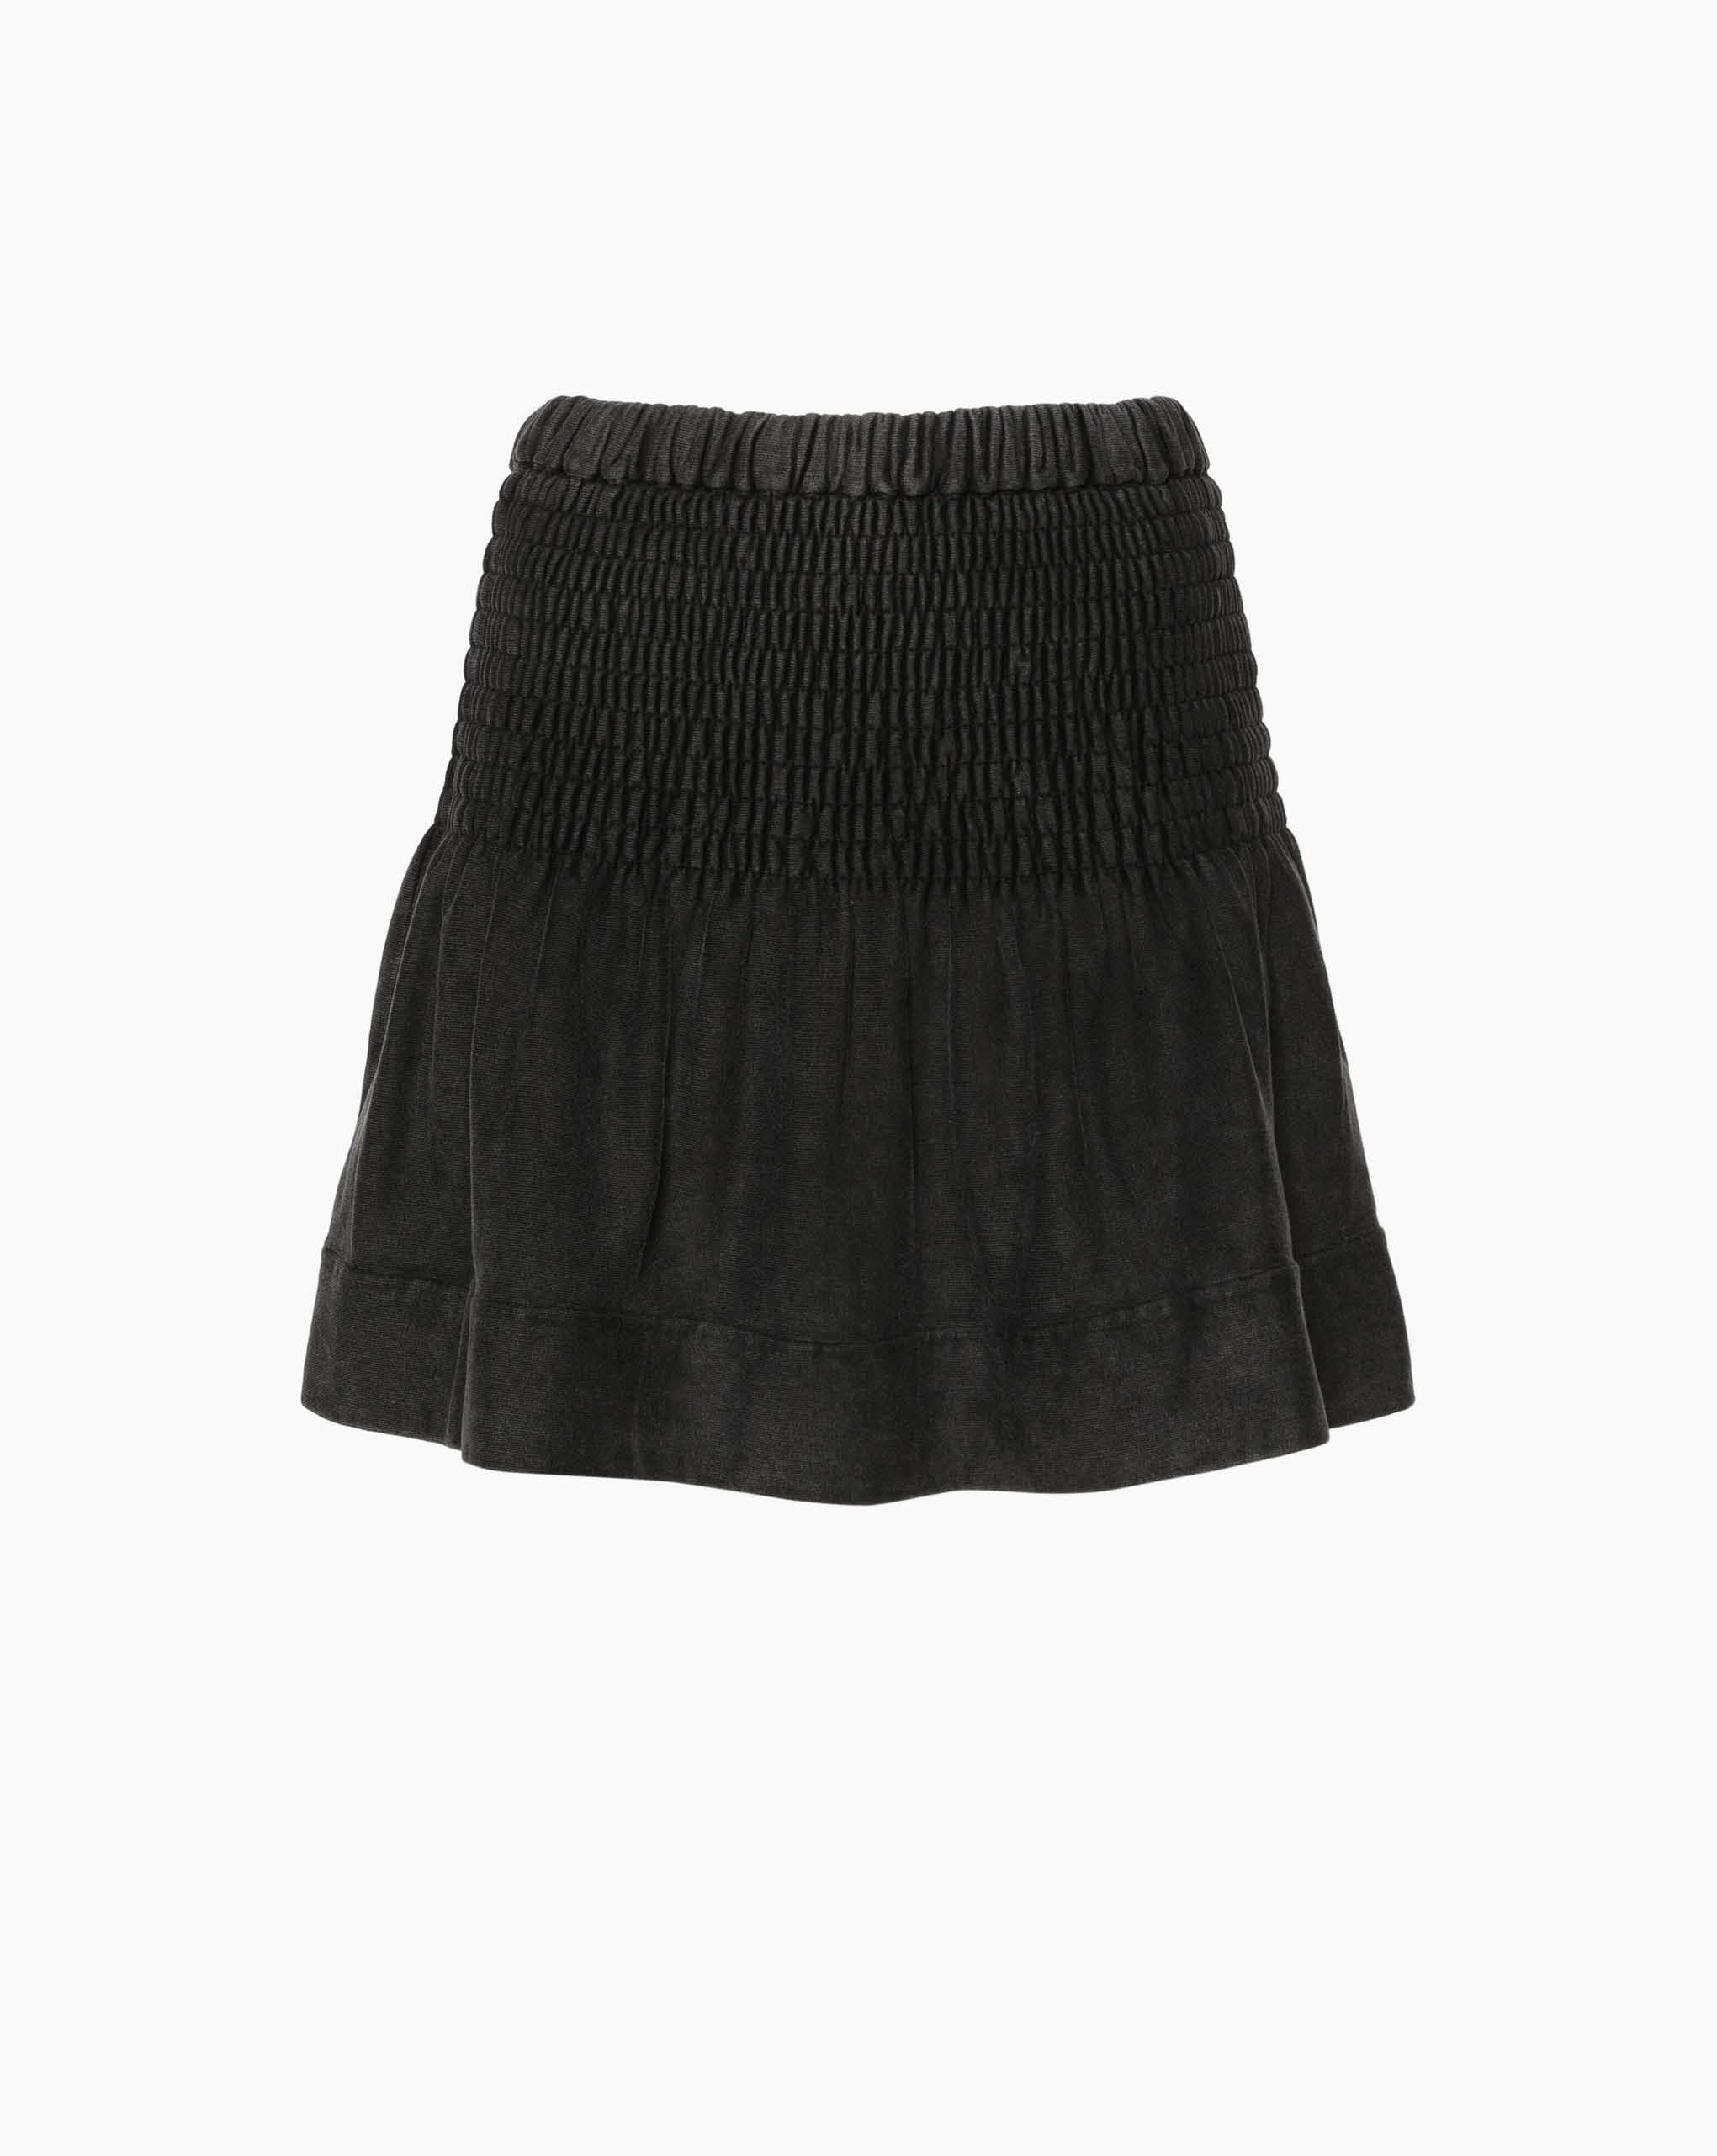 Pacifica Skirt